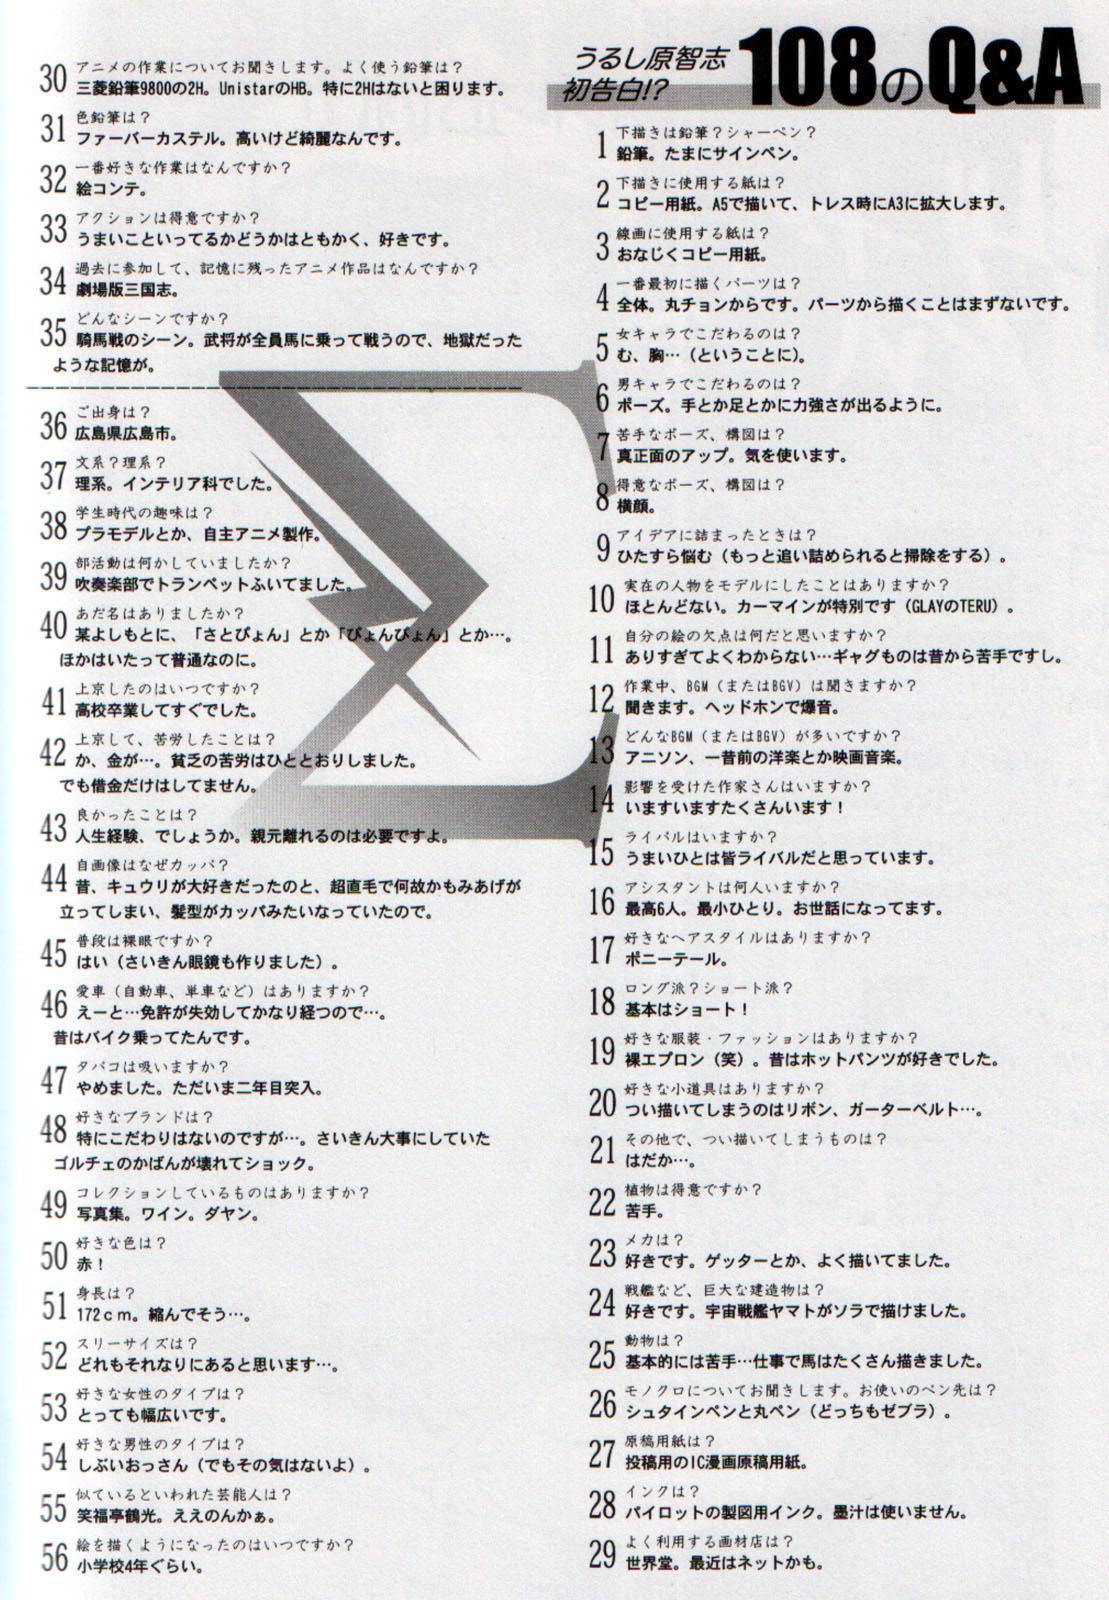 Urushihara Satoshi Illustration Shuu Sigma 109